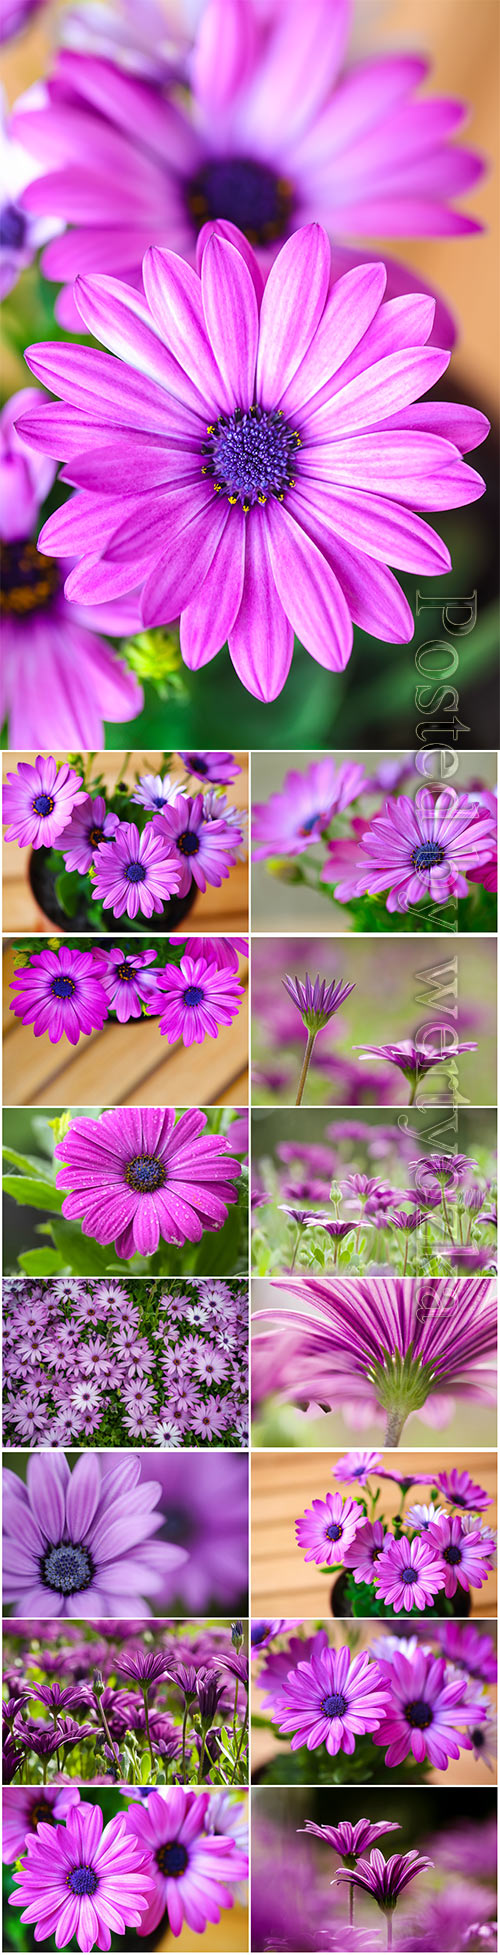 Lilac daisies beautiful stock photo